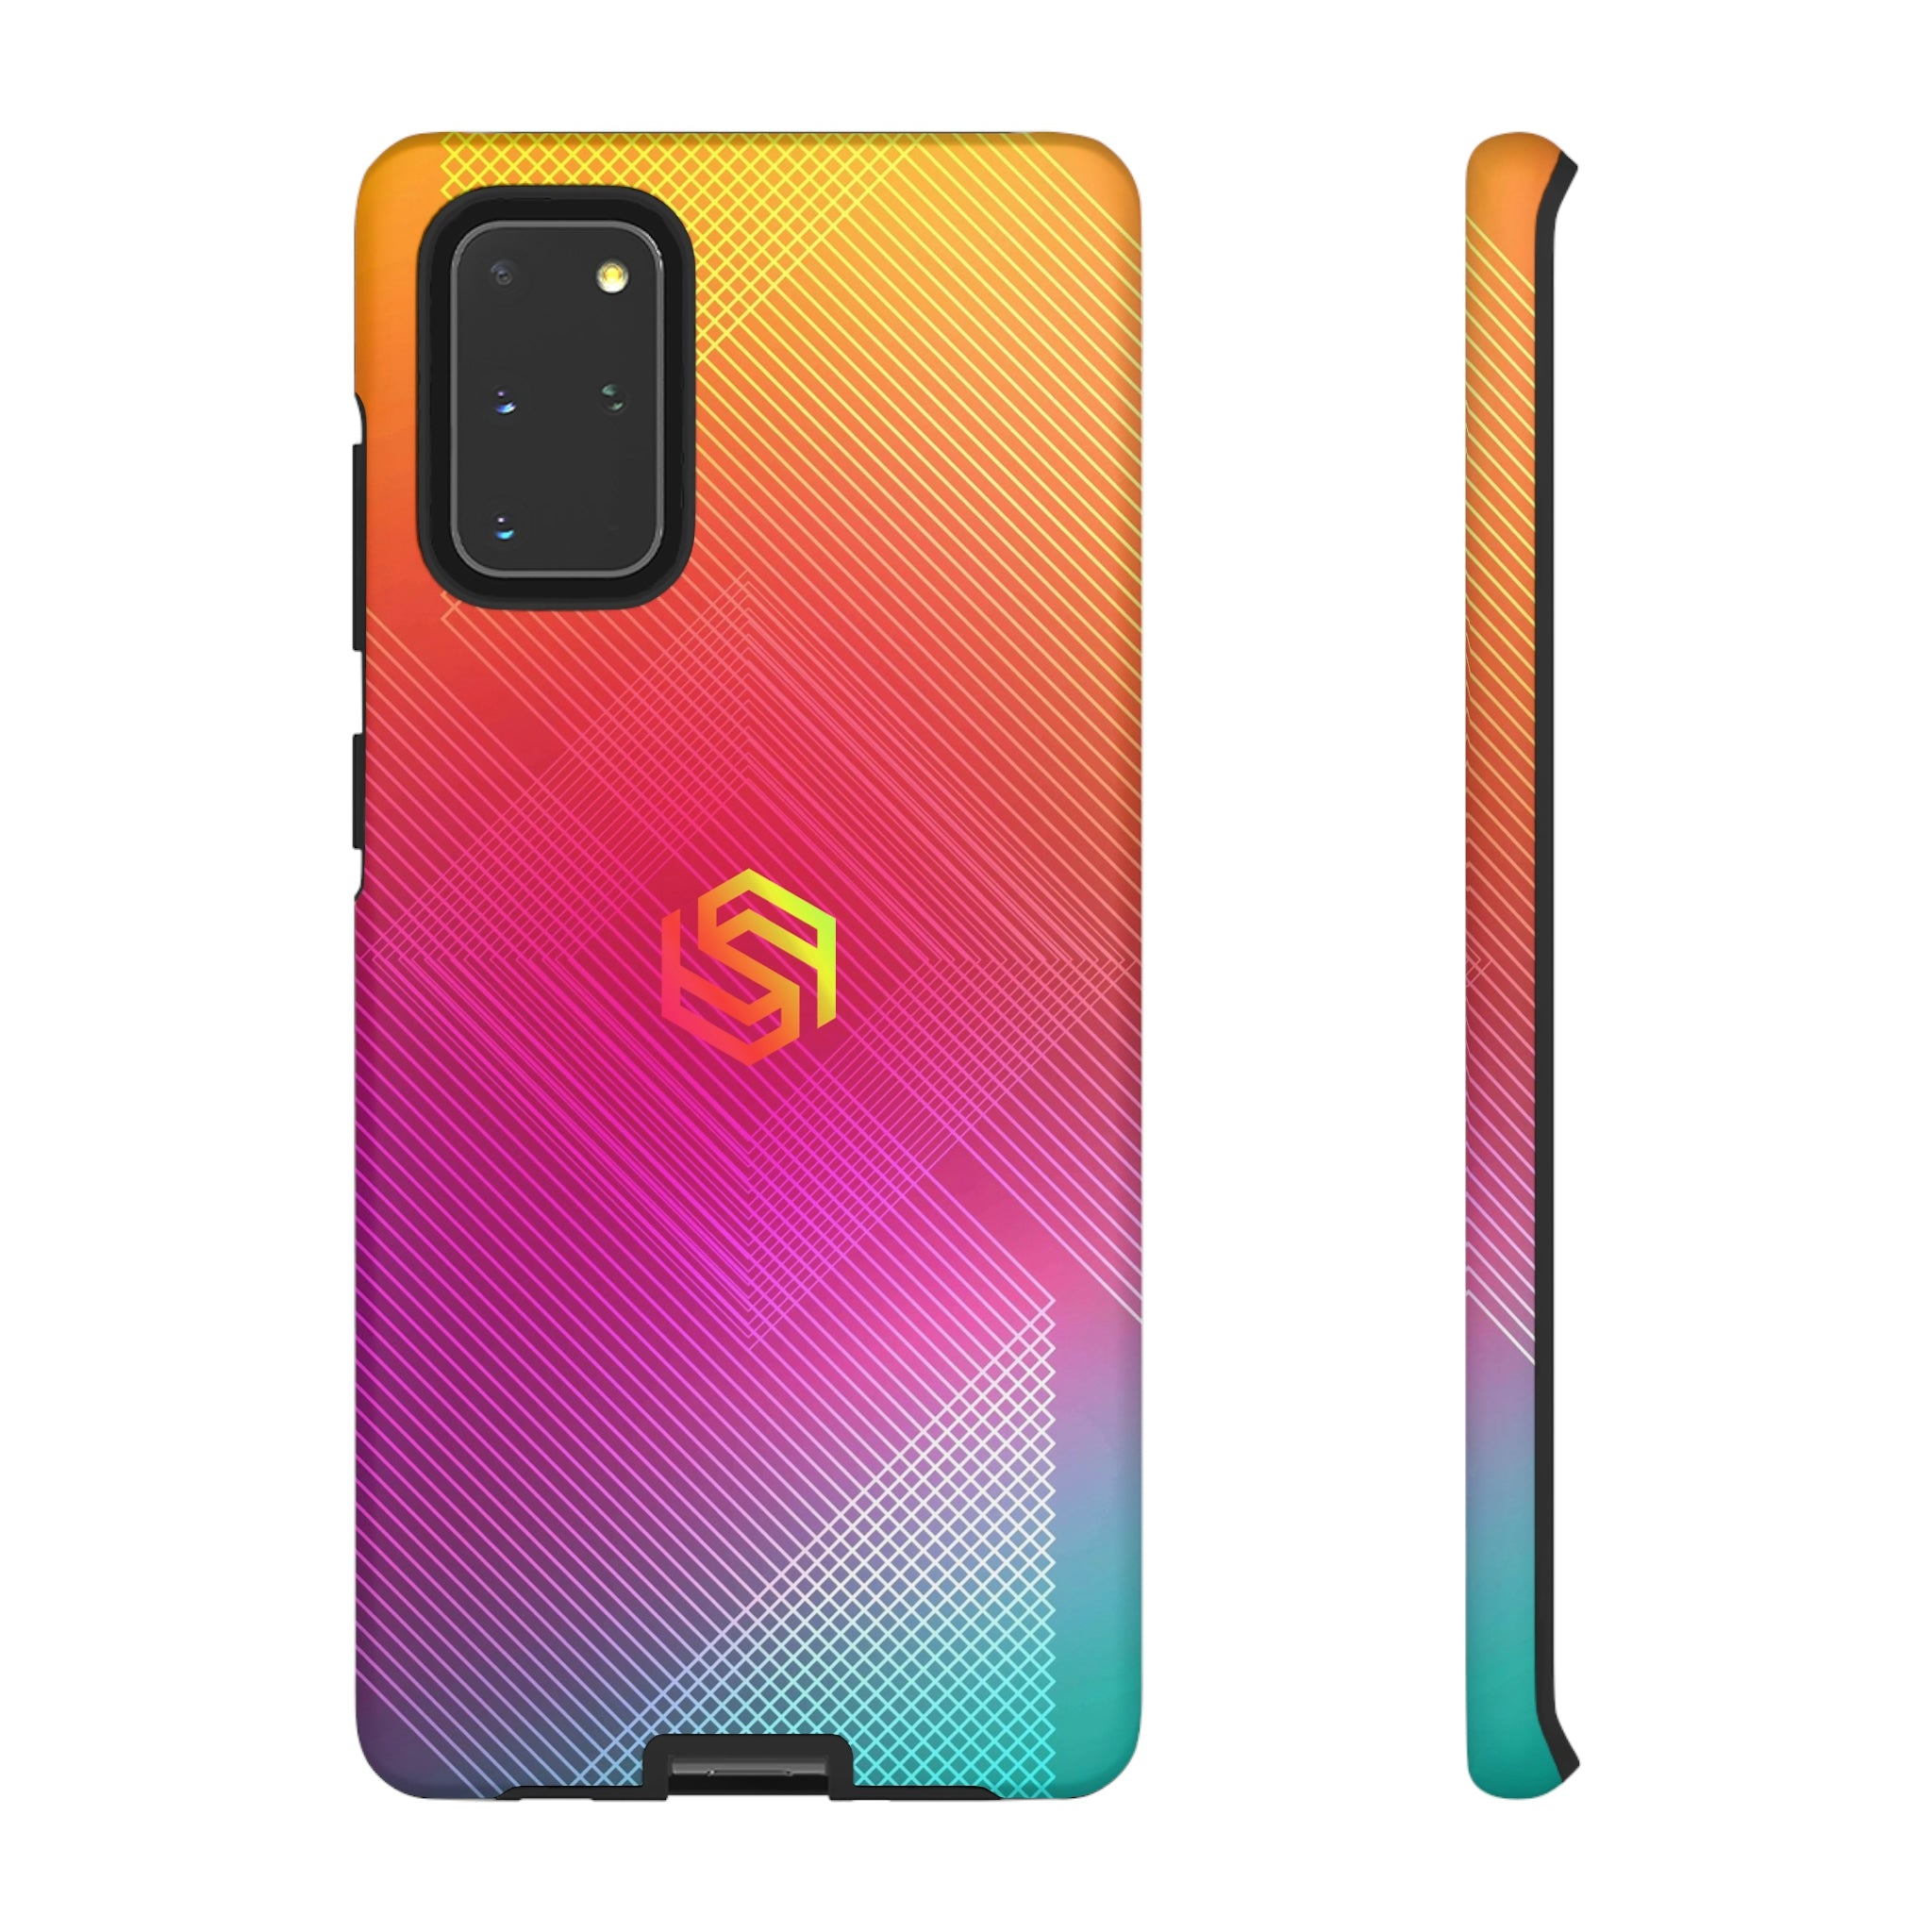 ColorFlow - Dual Layered, Full Body, Armored Phone Case for iPhone 13/Samsung Galaxy S22/Google Pixel 6Smartphone CasesStreamLiteStreamLite